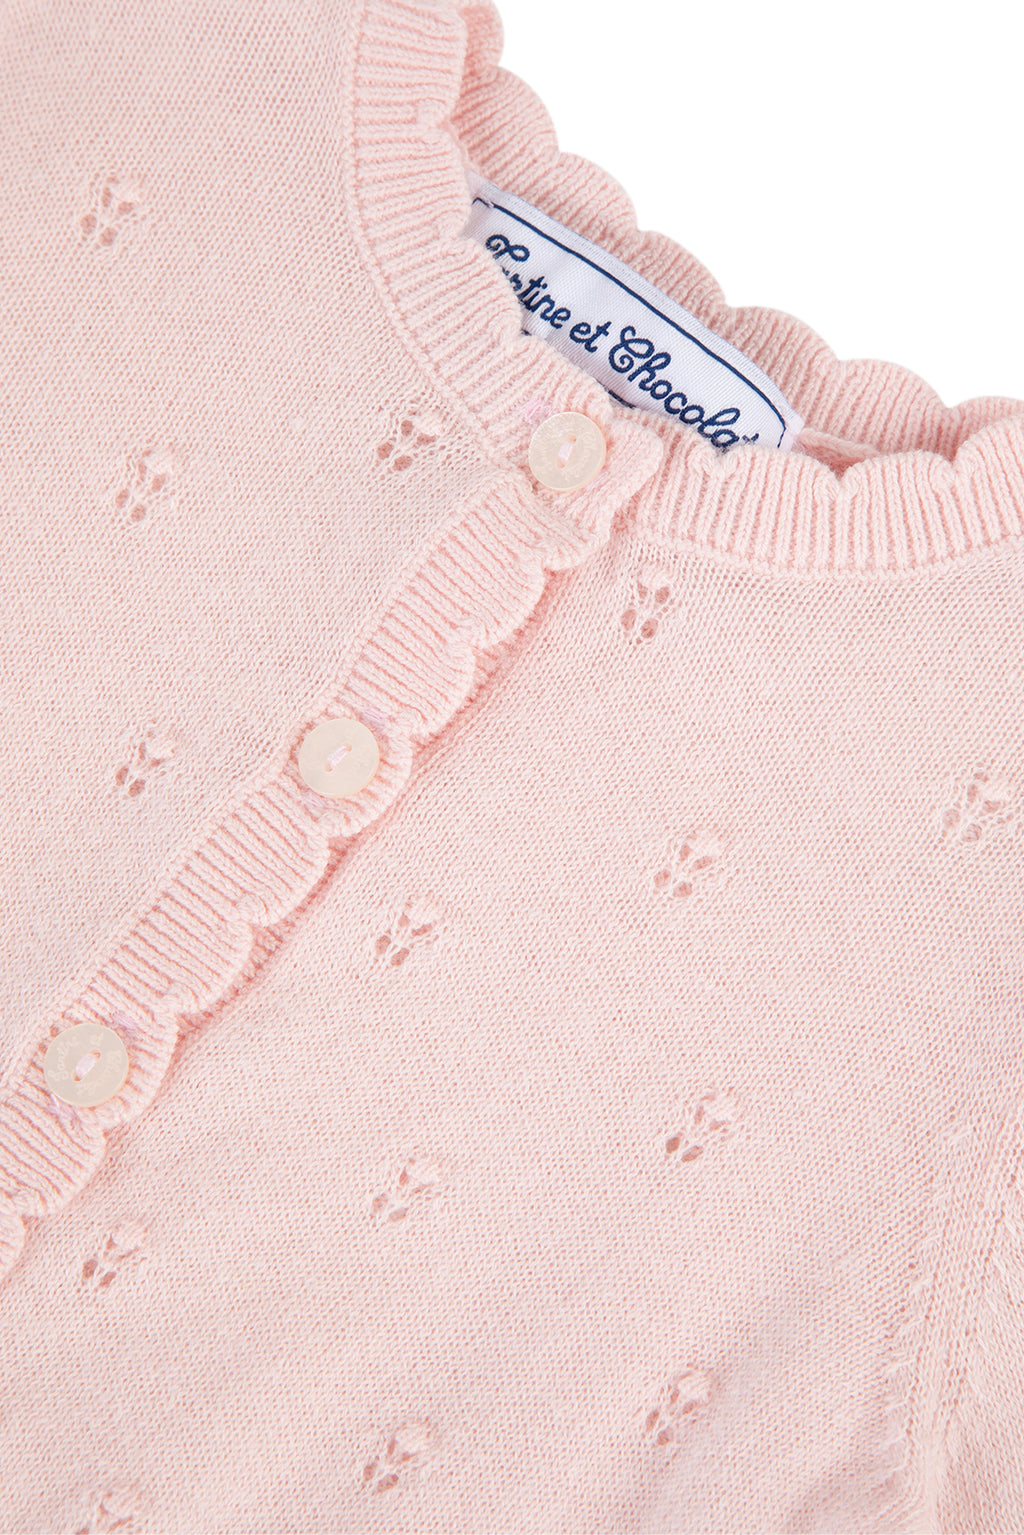 Cardigan - Pale pink  Knitwear openwork